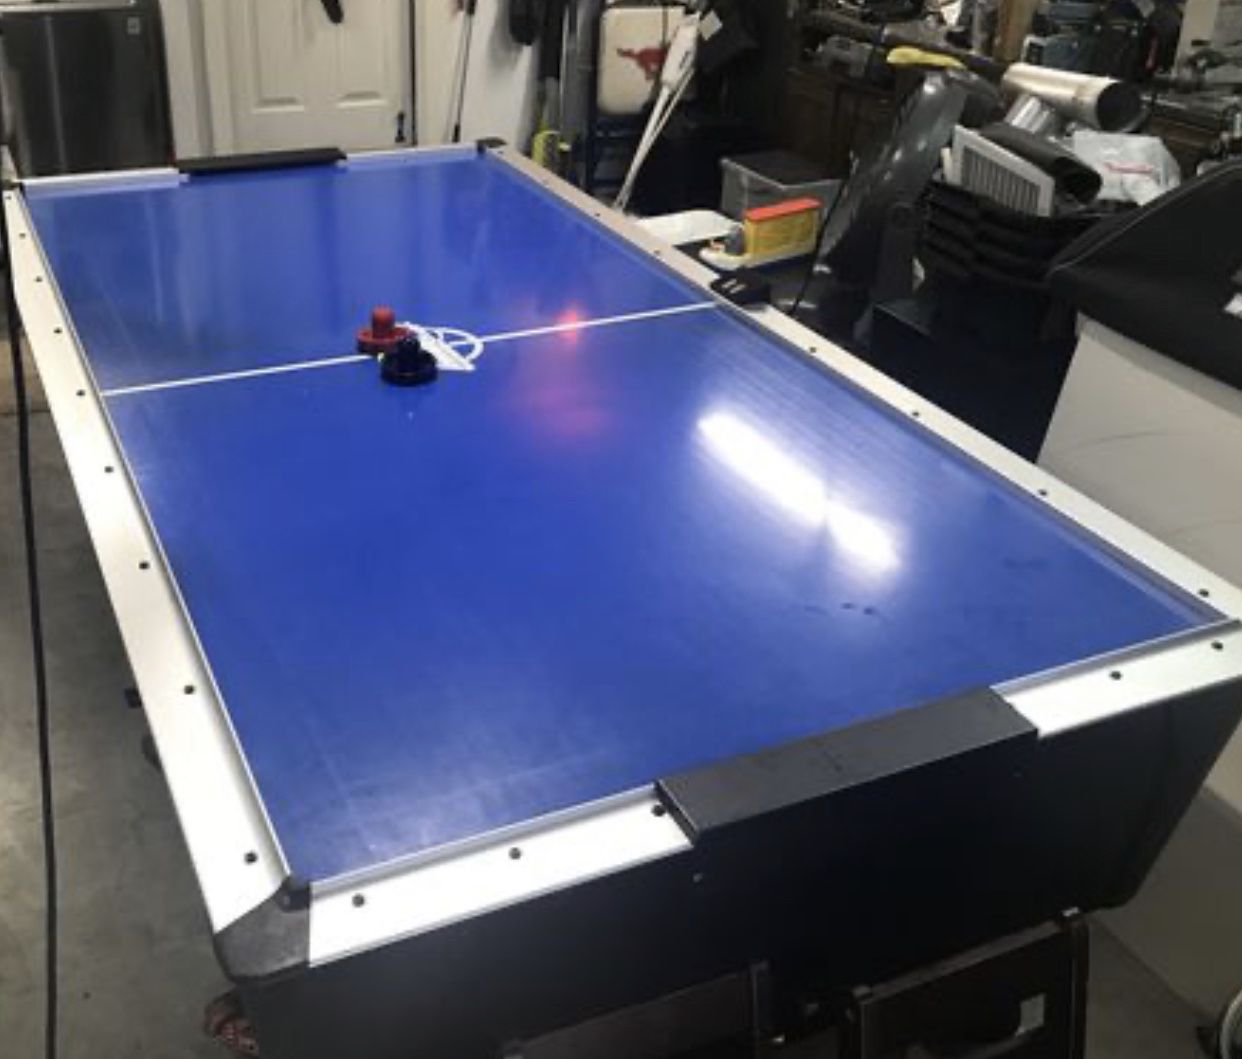 Dynamo 8’ Air Hockey Table